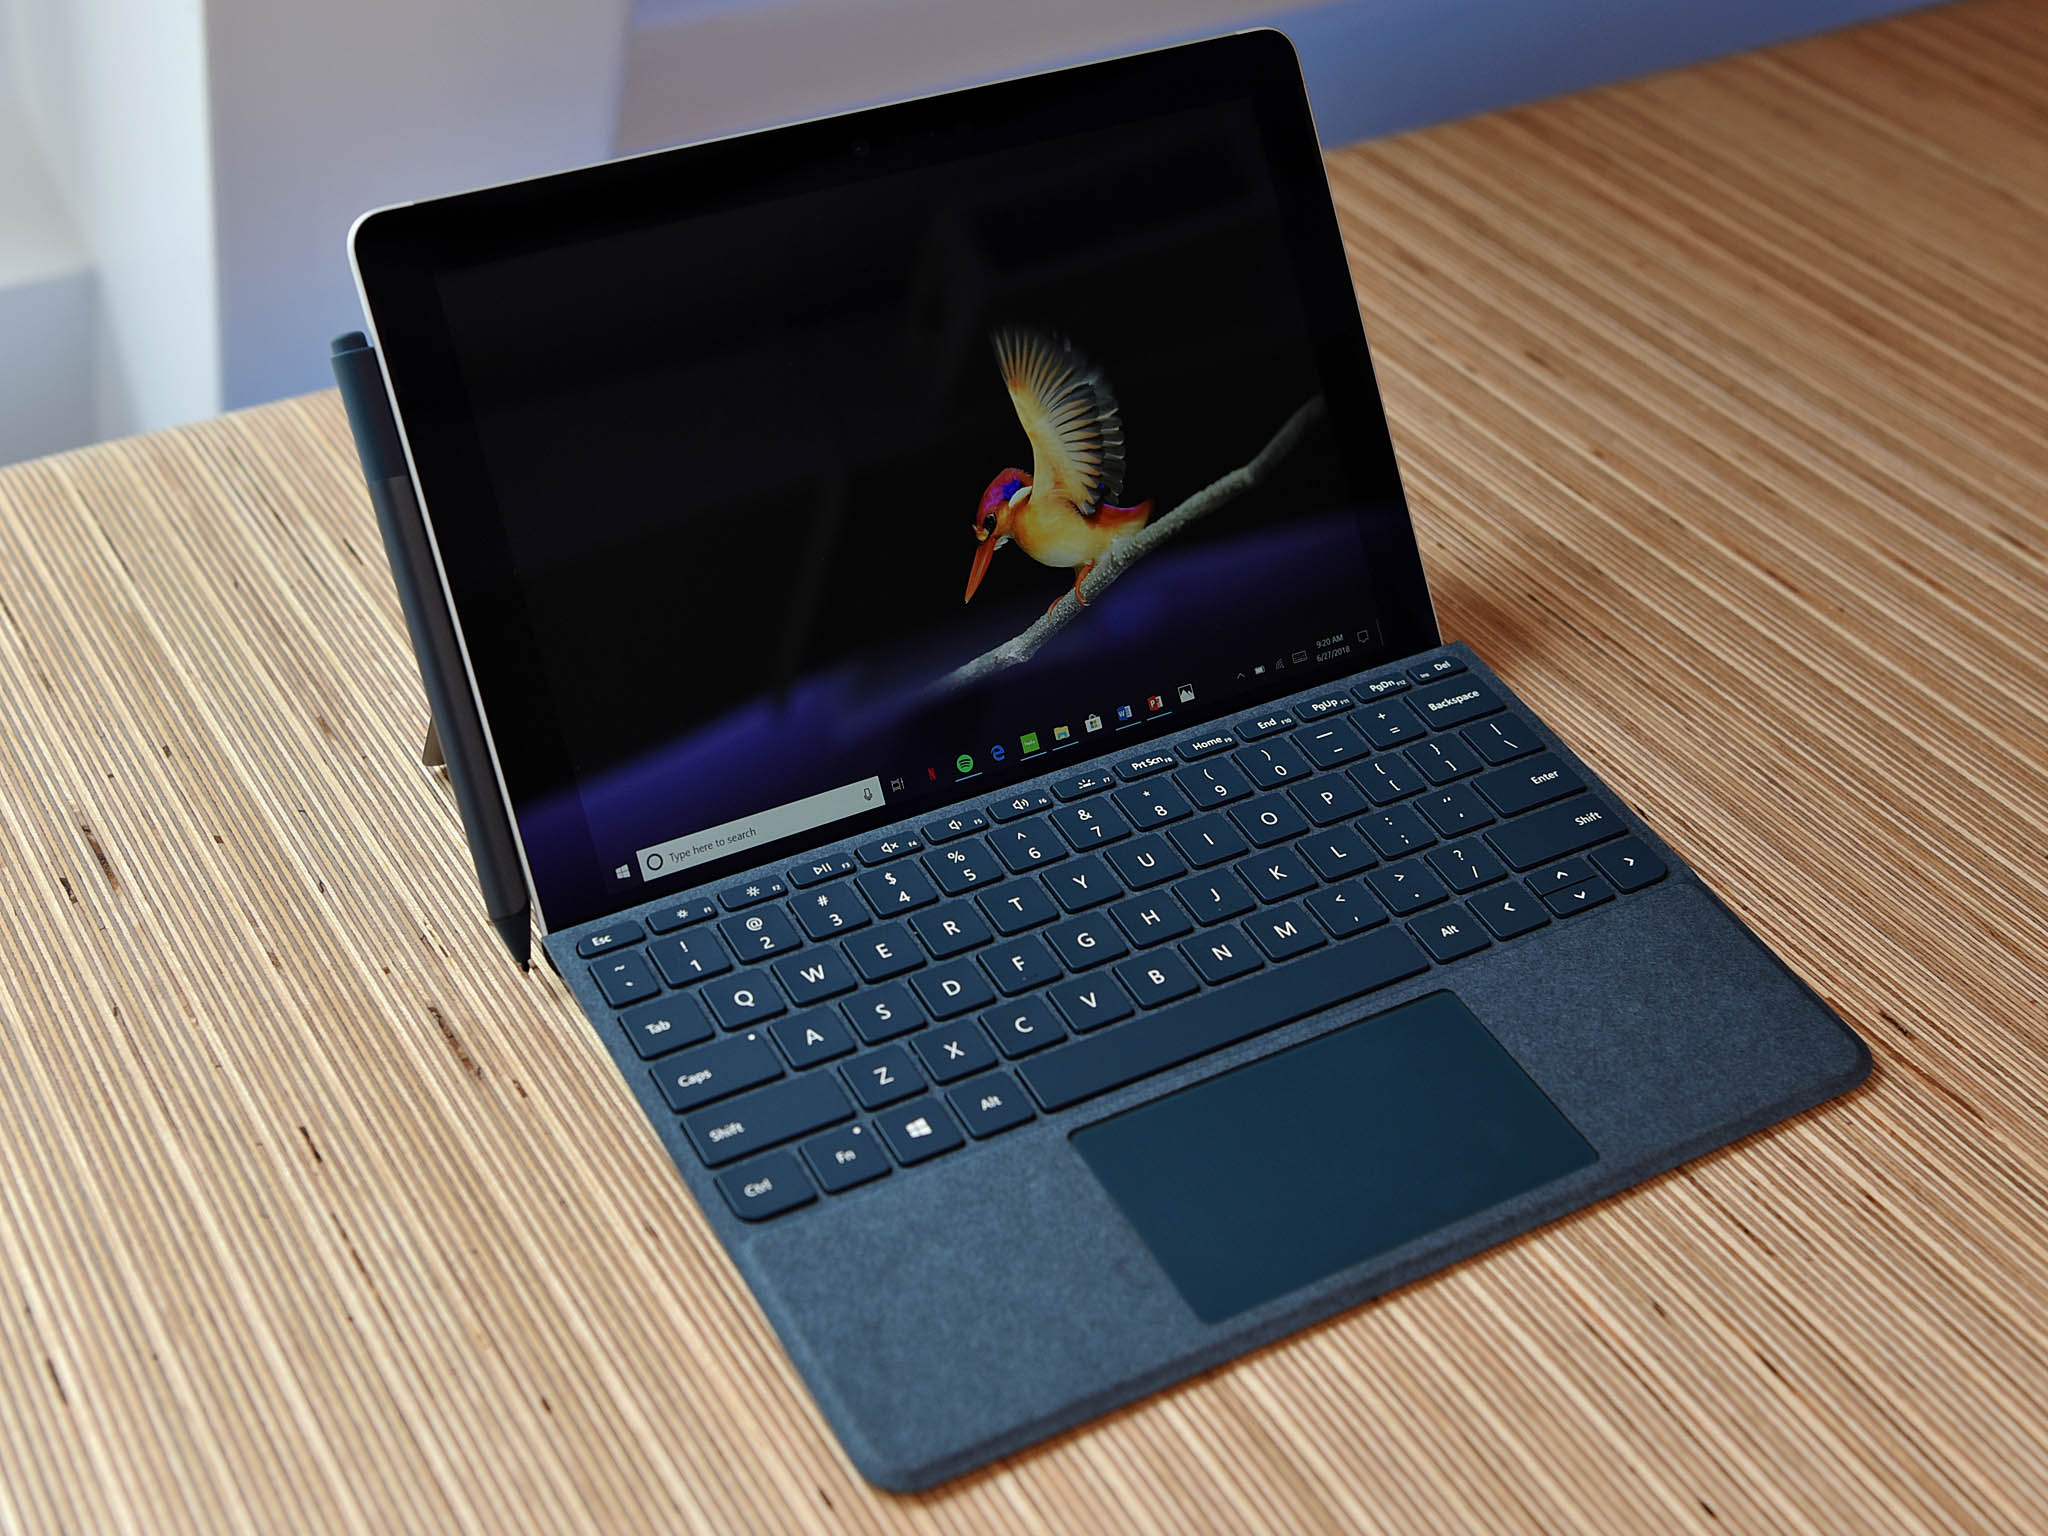 Costco selling unannounced Surface Go model with 4GB RAM, 128GB storage